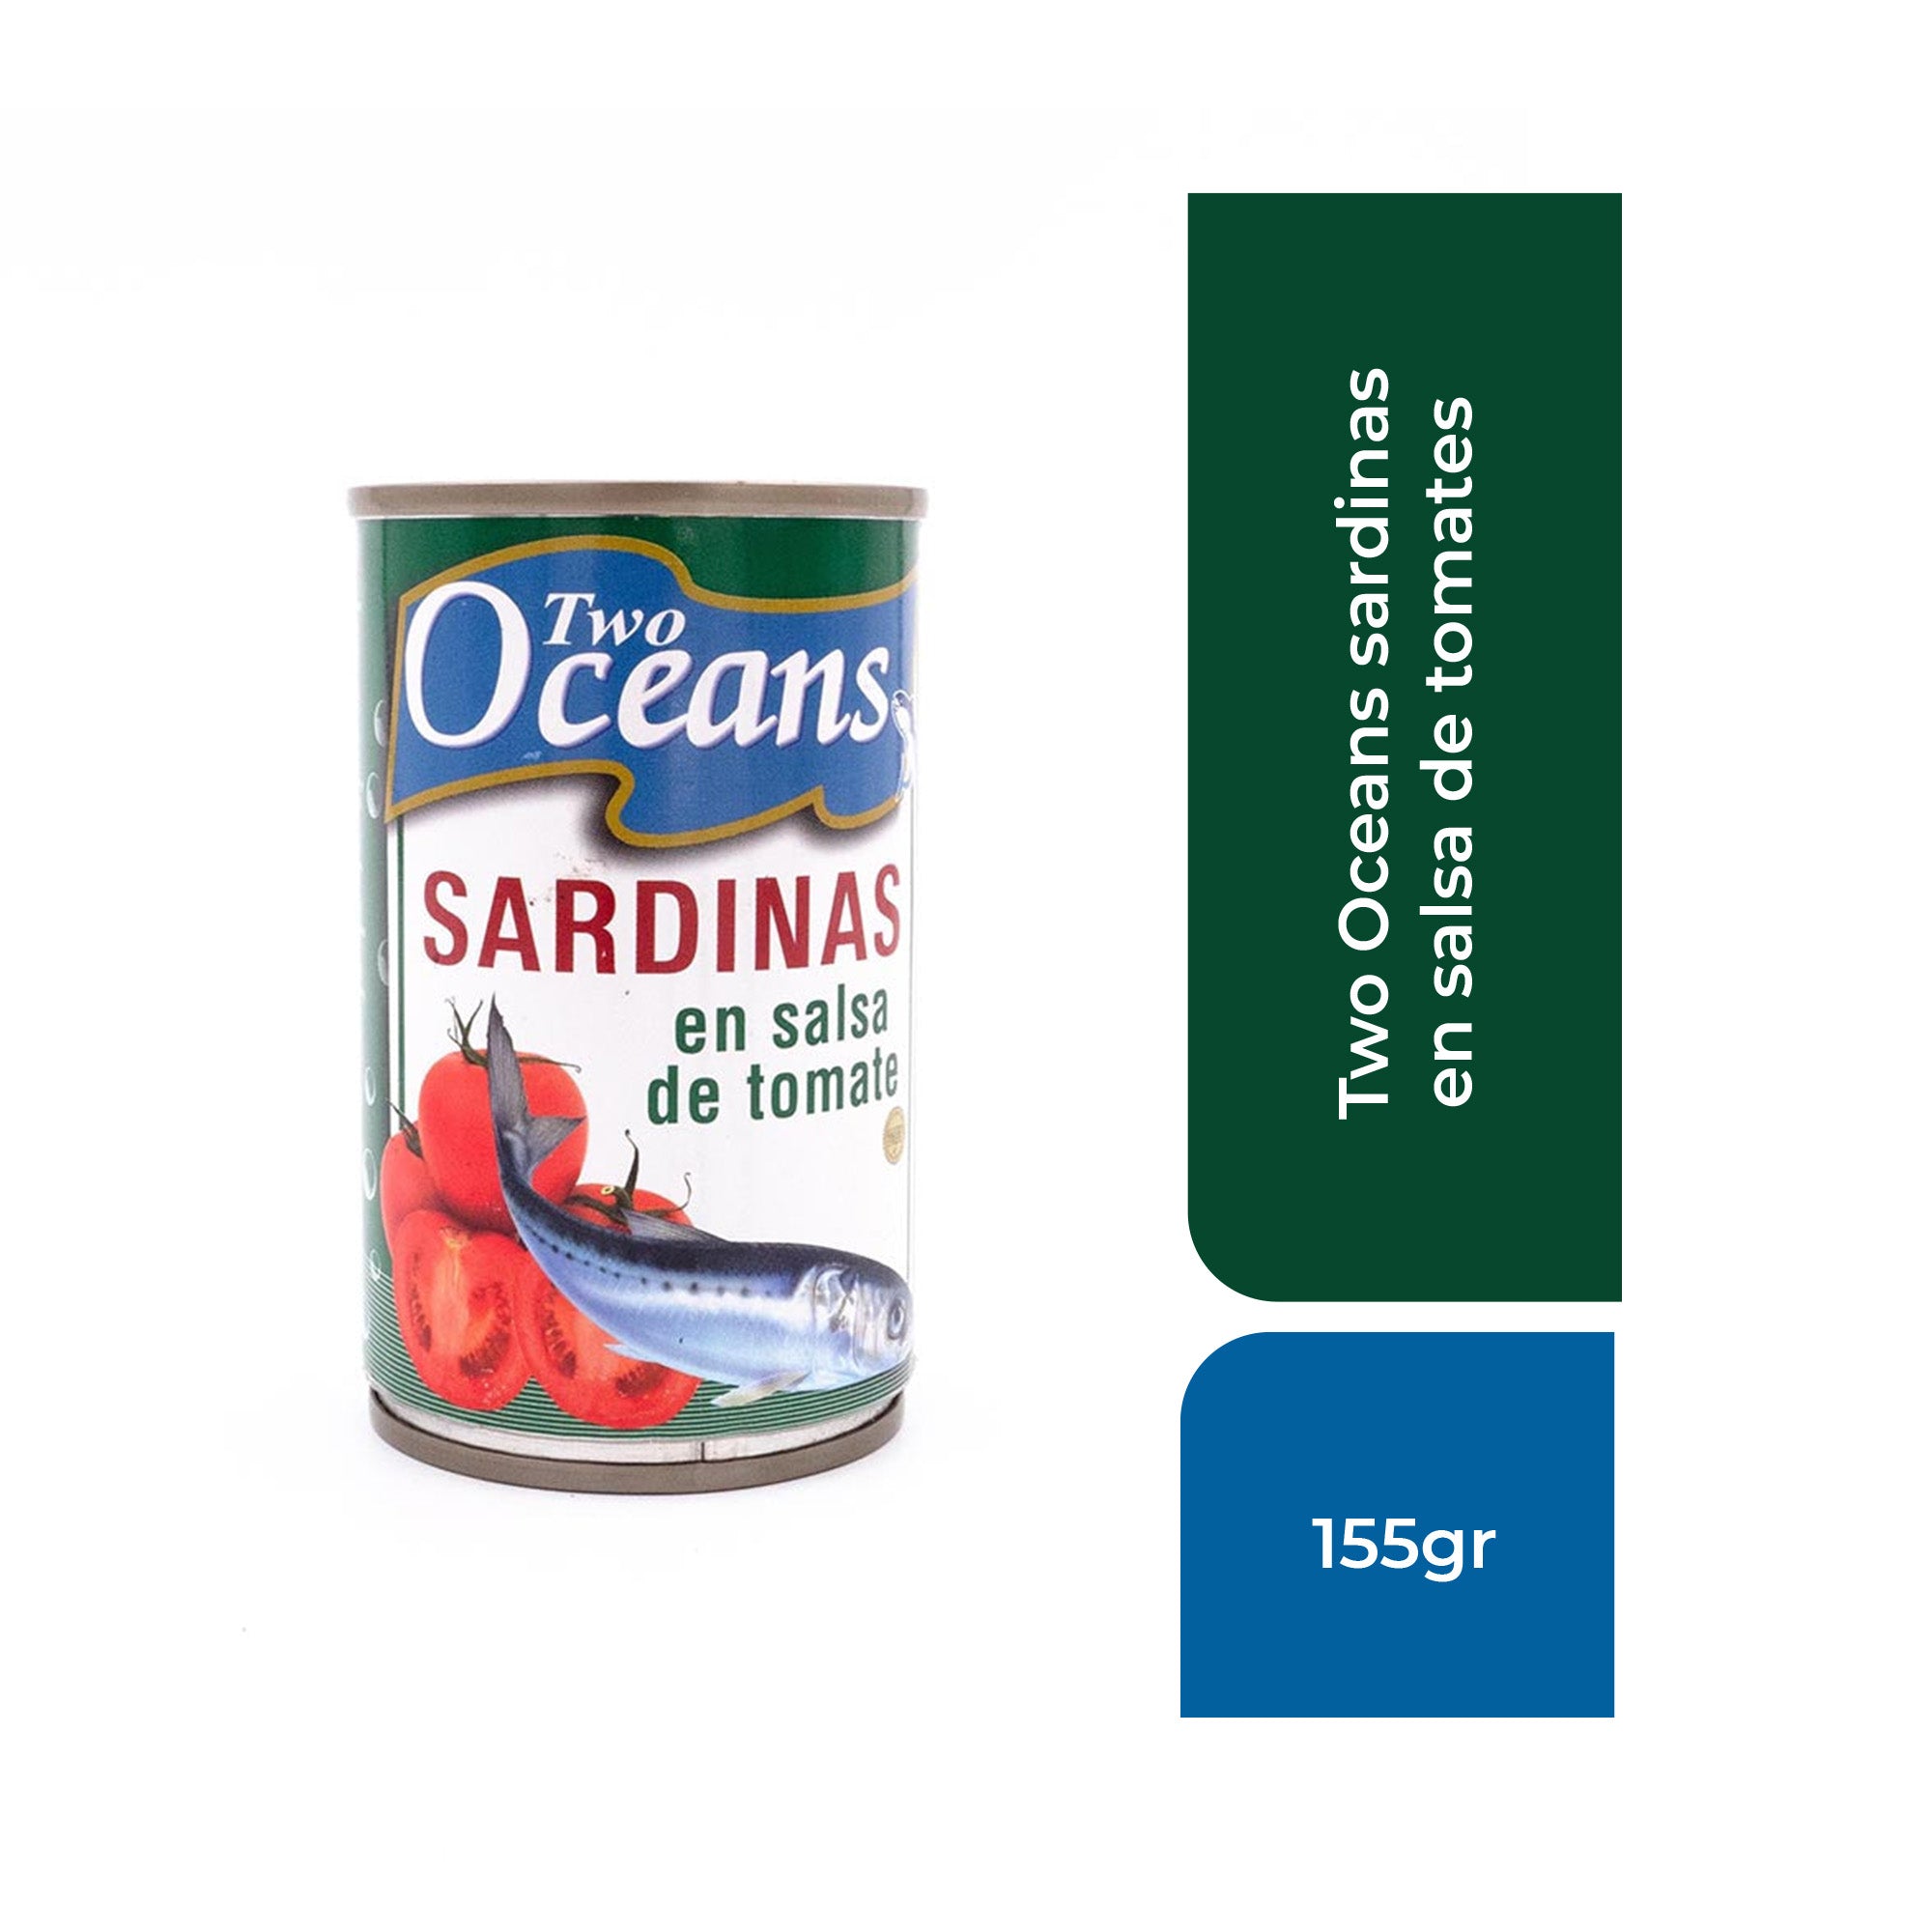 Two Oceans sardinas en salsa de tomates 155 Grs